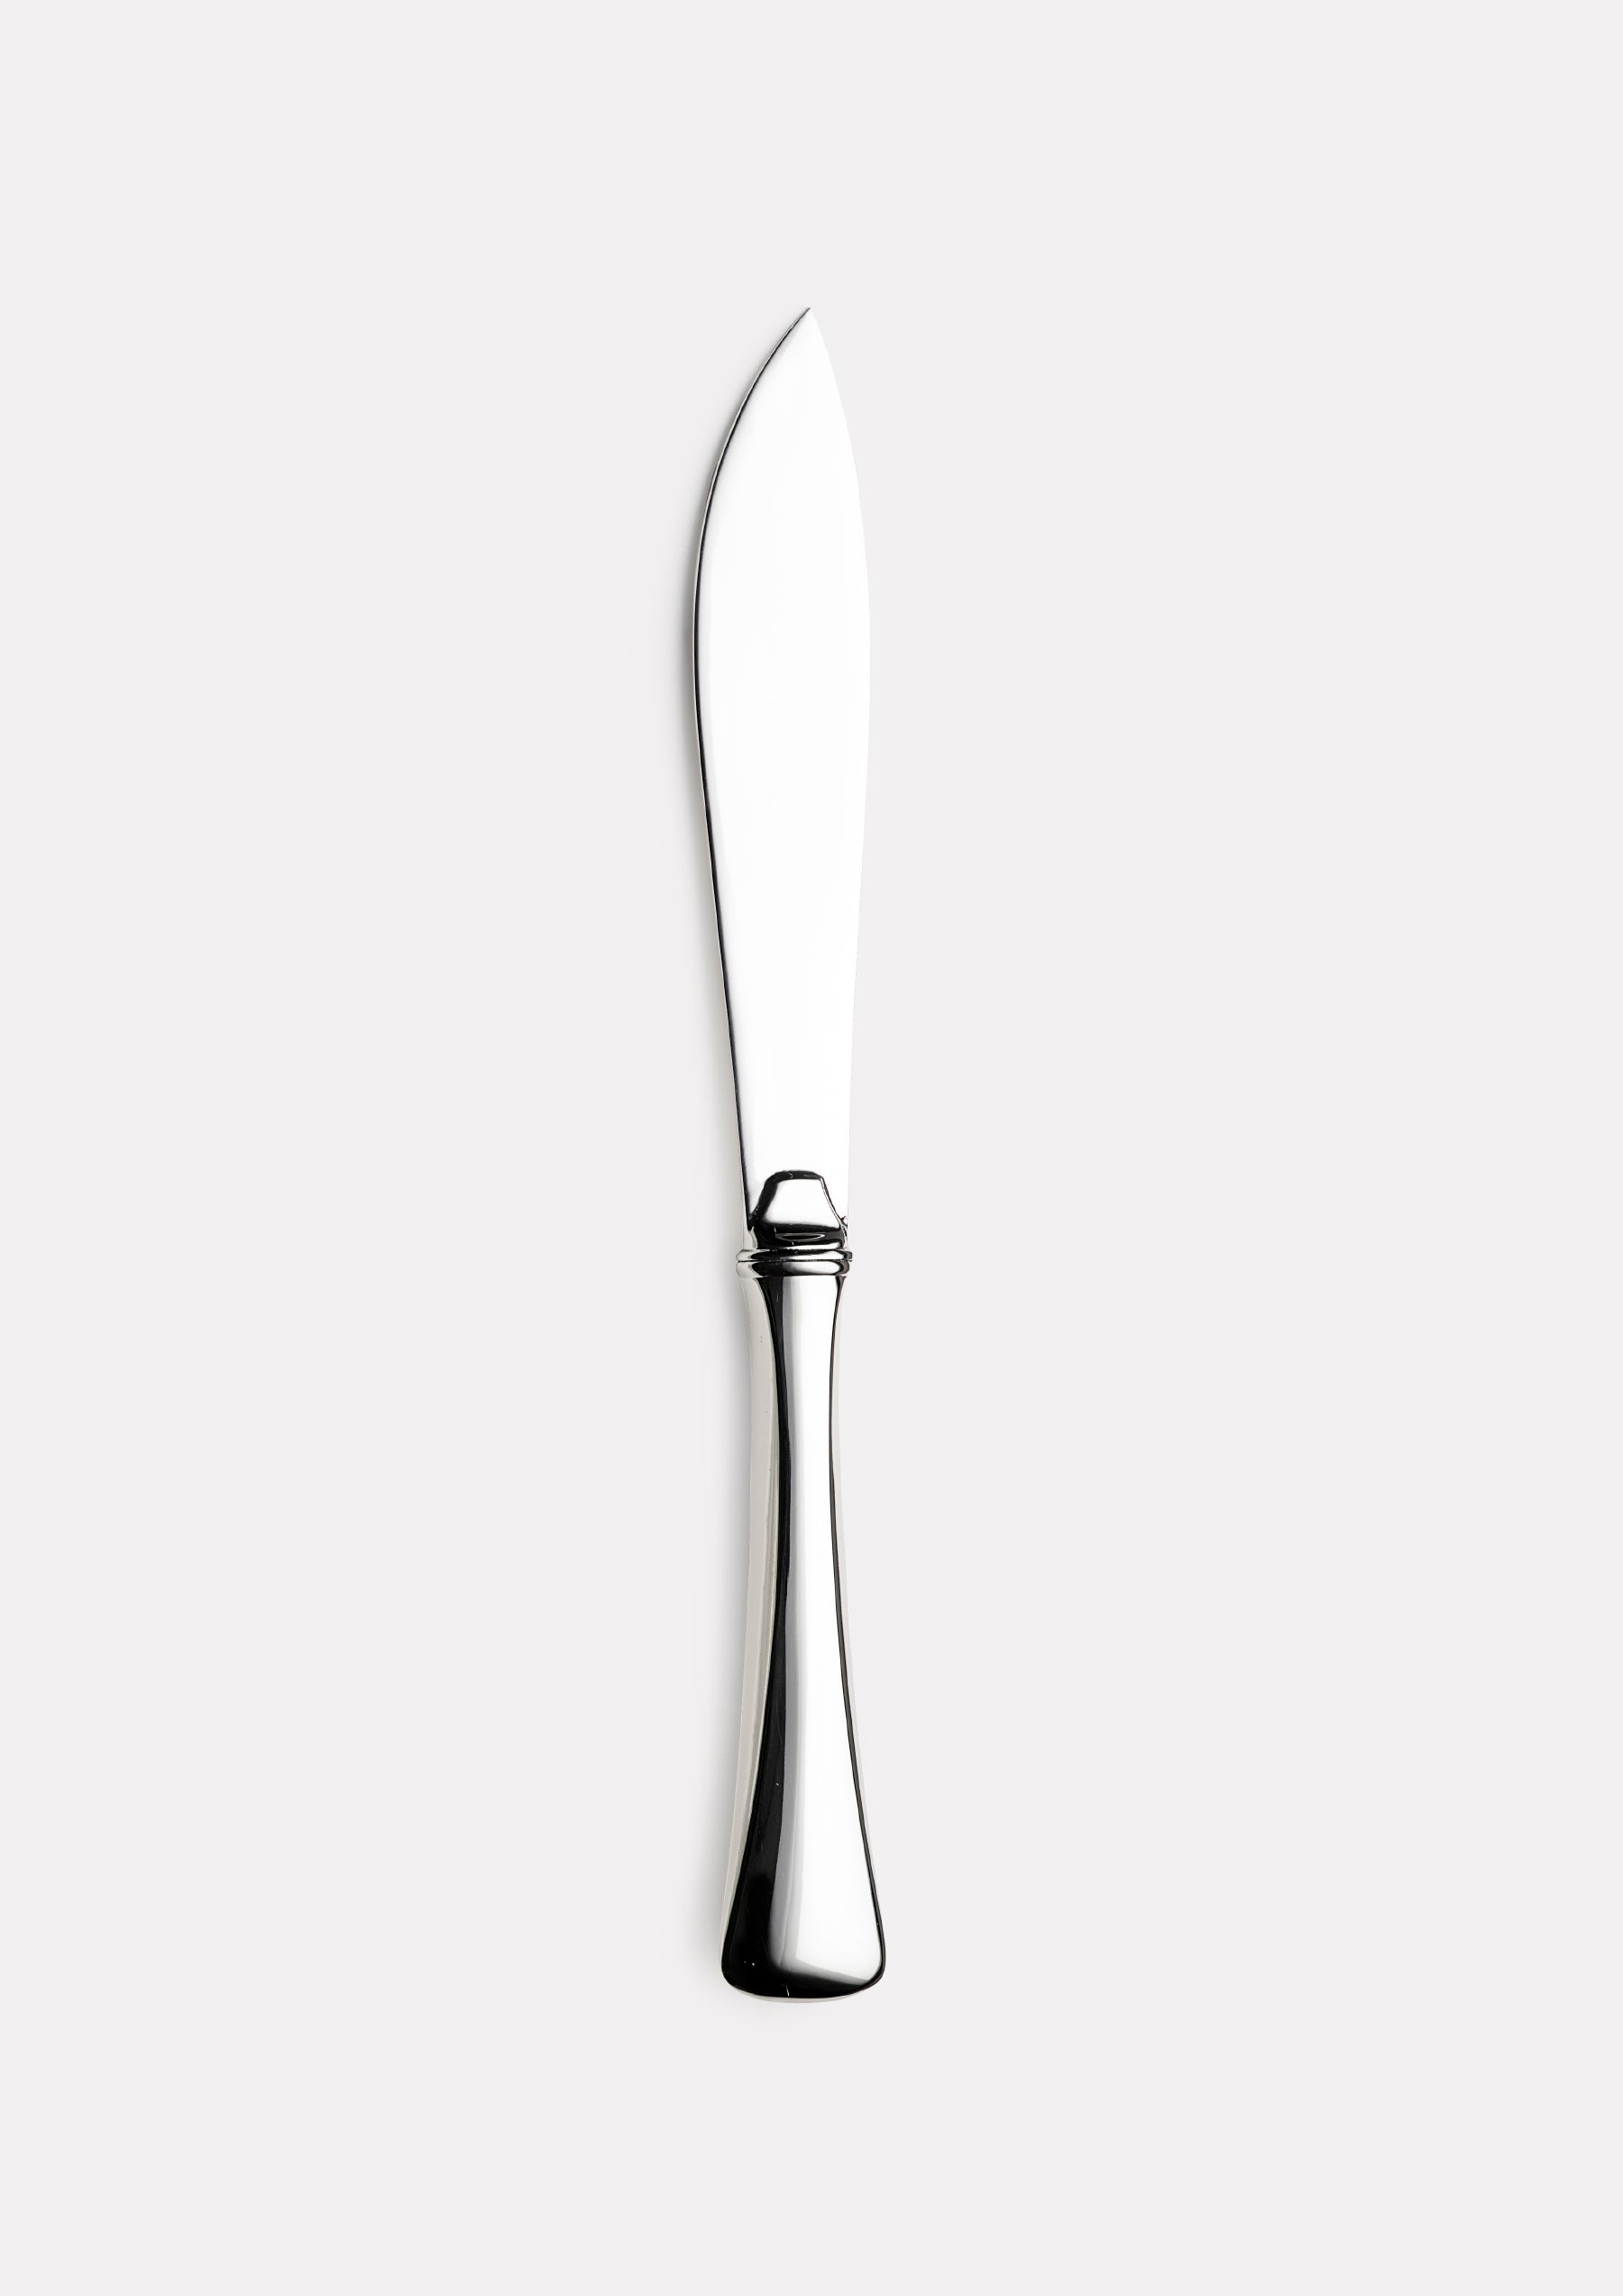 Pariser fishing knife